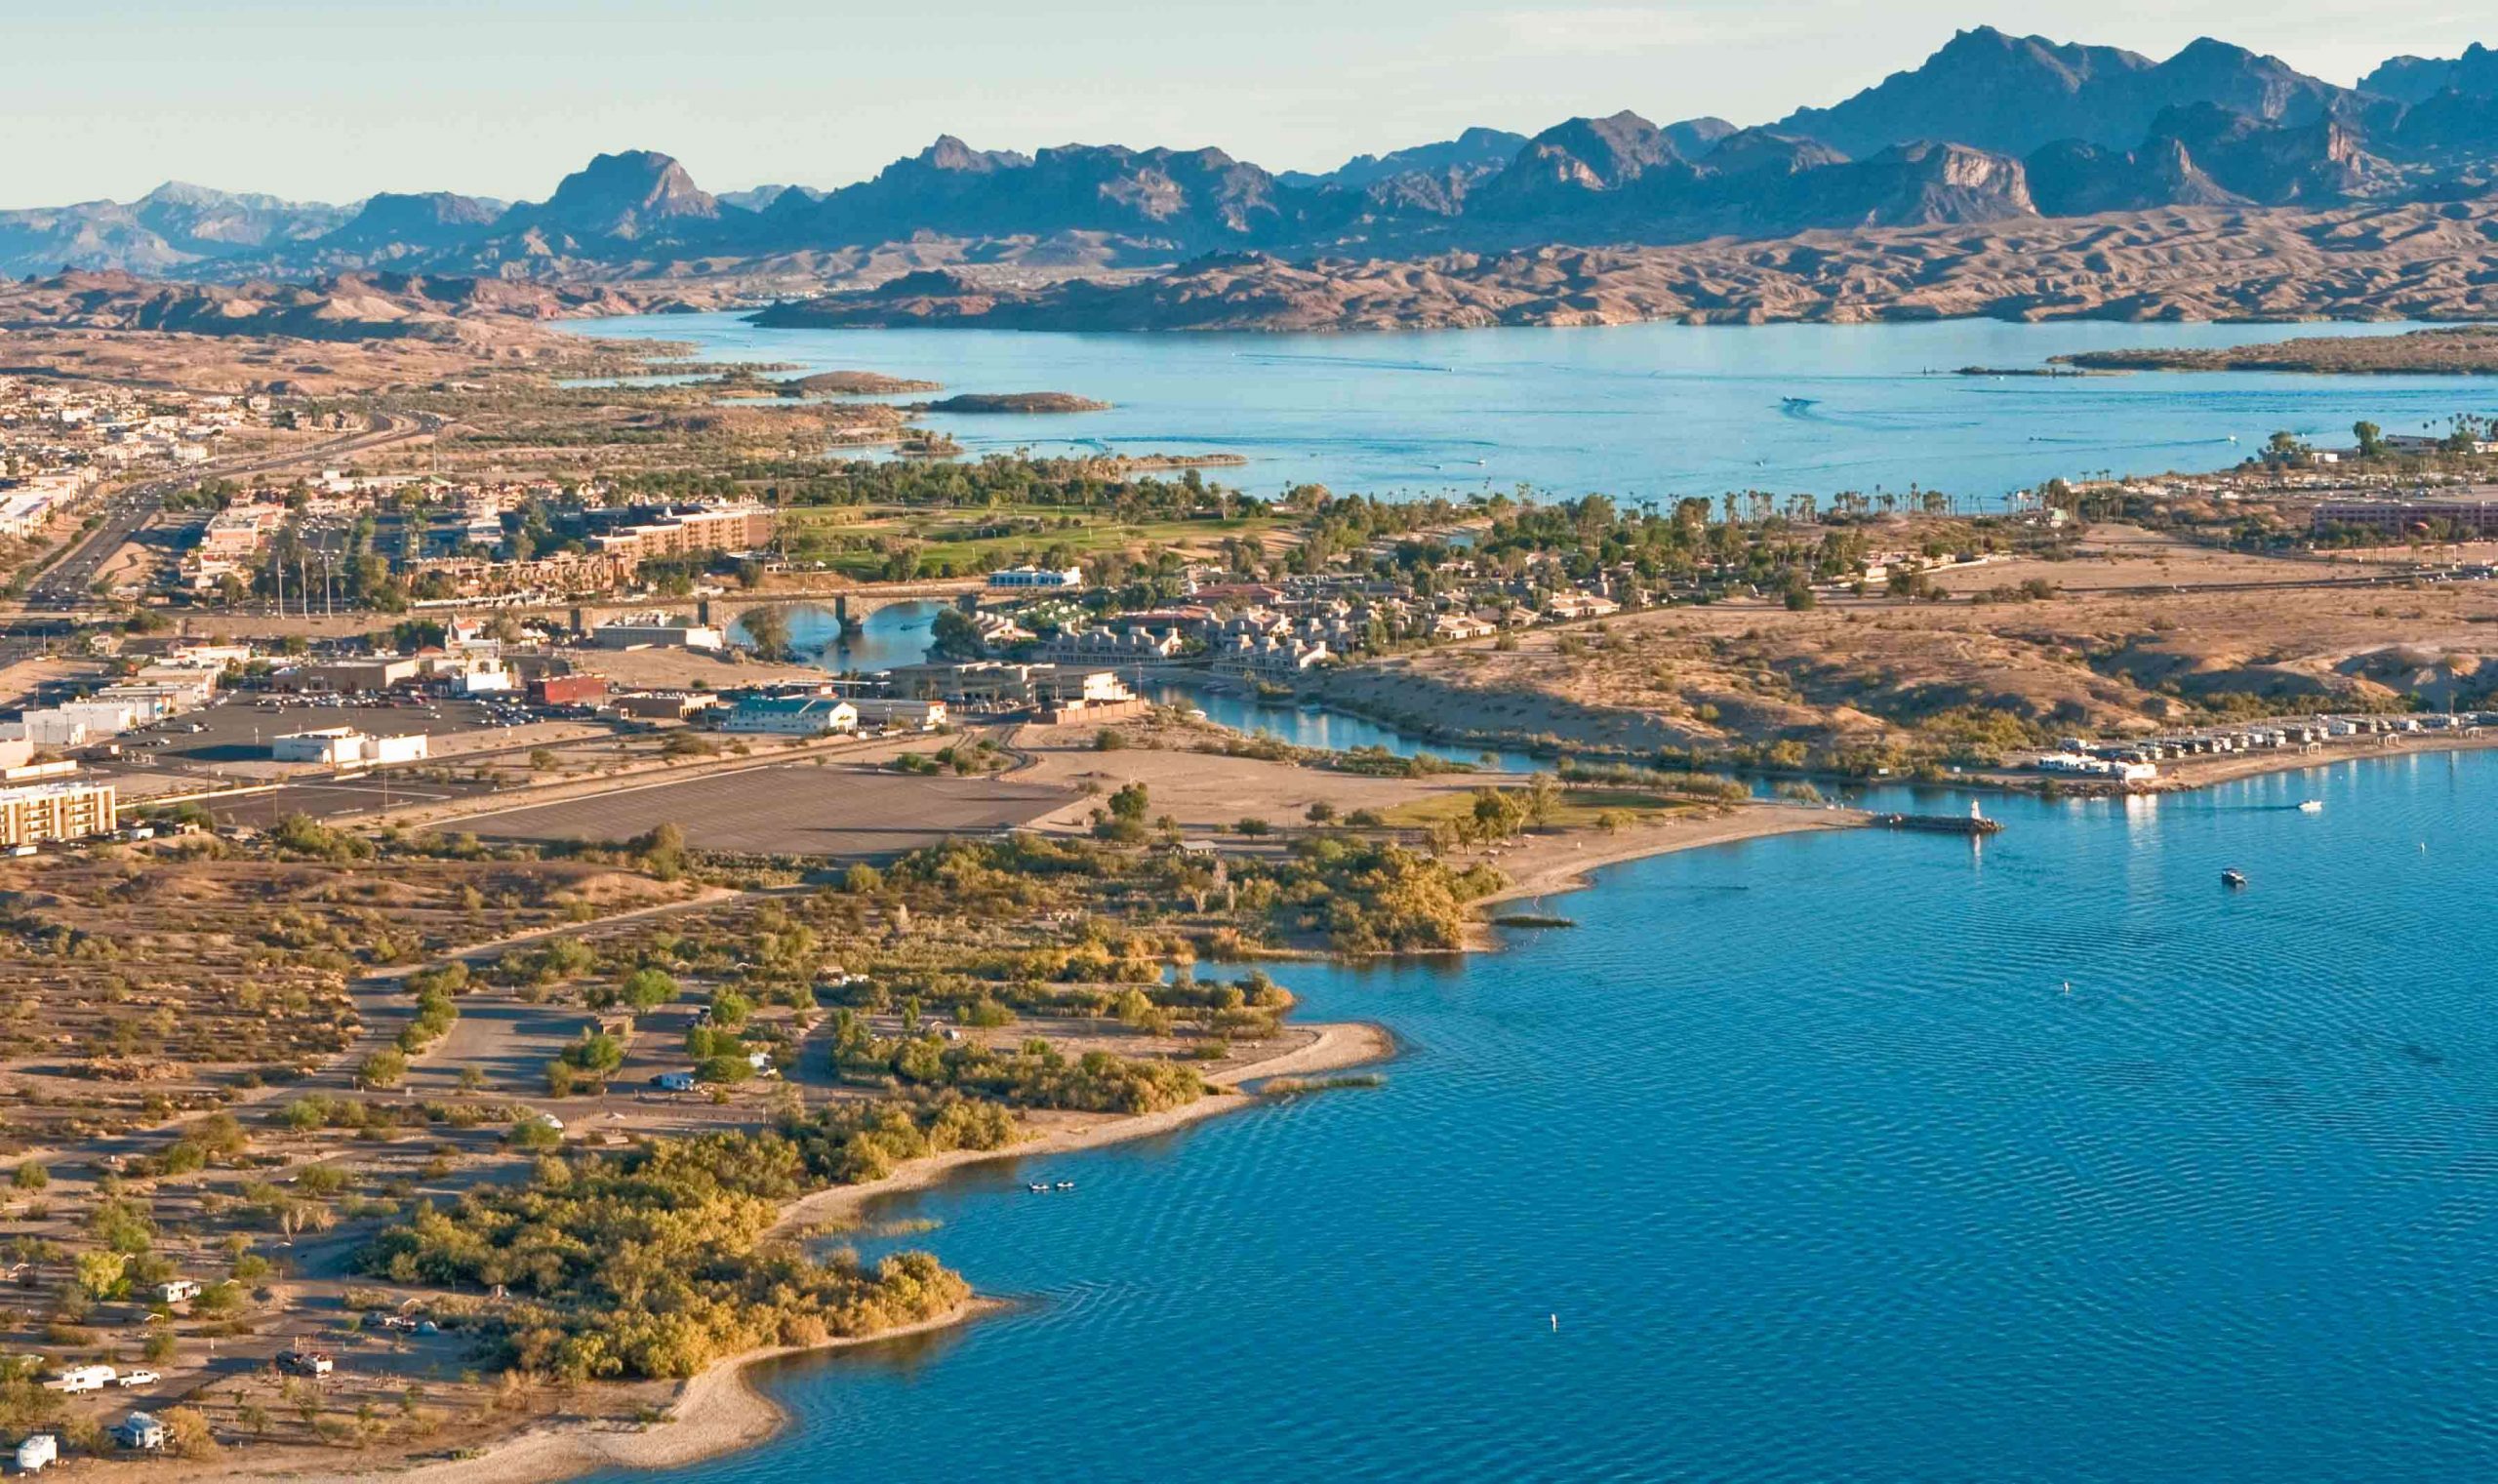 The Bassmaster Elite Series will visit Lake Havasu May 7-10. The 19,300-acre reservoir of the Colorado River serves as the California-Arizona border. (Photo courtesy of lakehavasu.org)